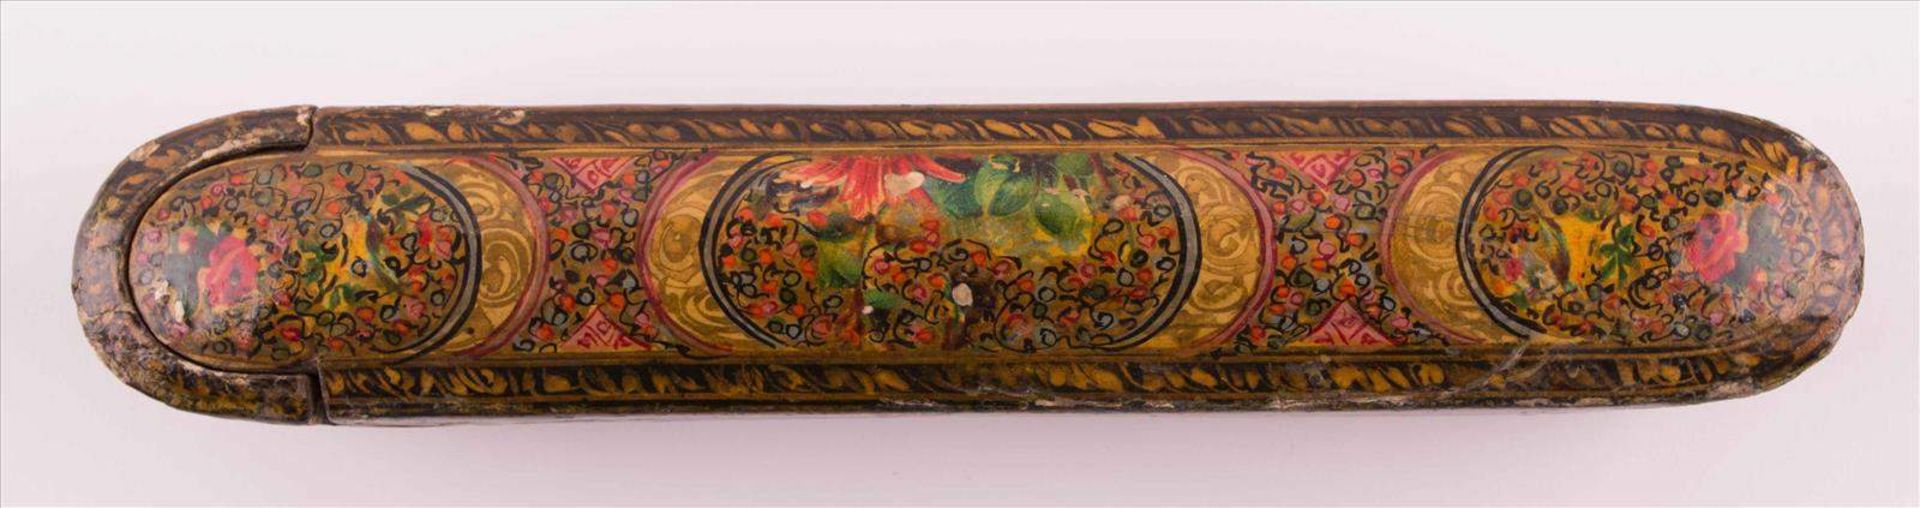 SCHREIBETUI (QALAMDAN) Persien wohl 17. Jhd. / Pencil case(Qualamdan) Persia, probably 17th